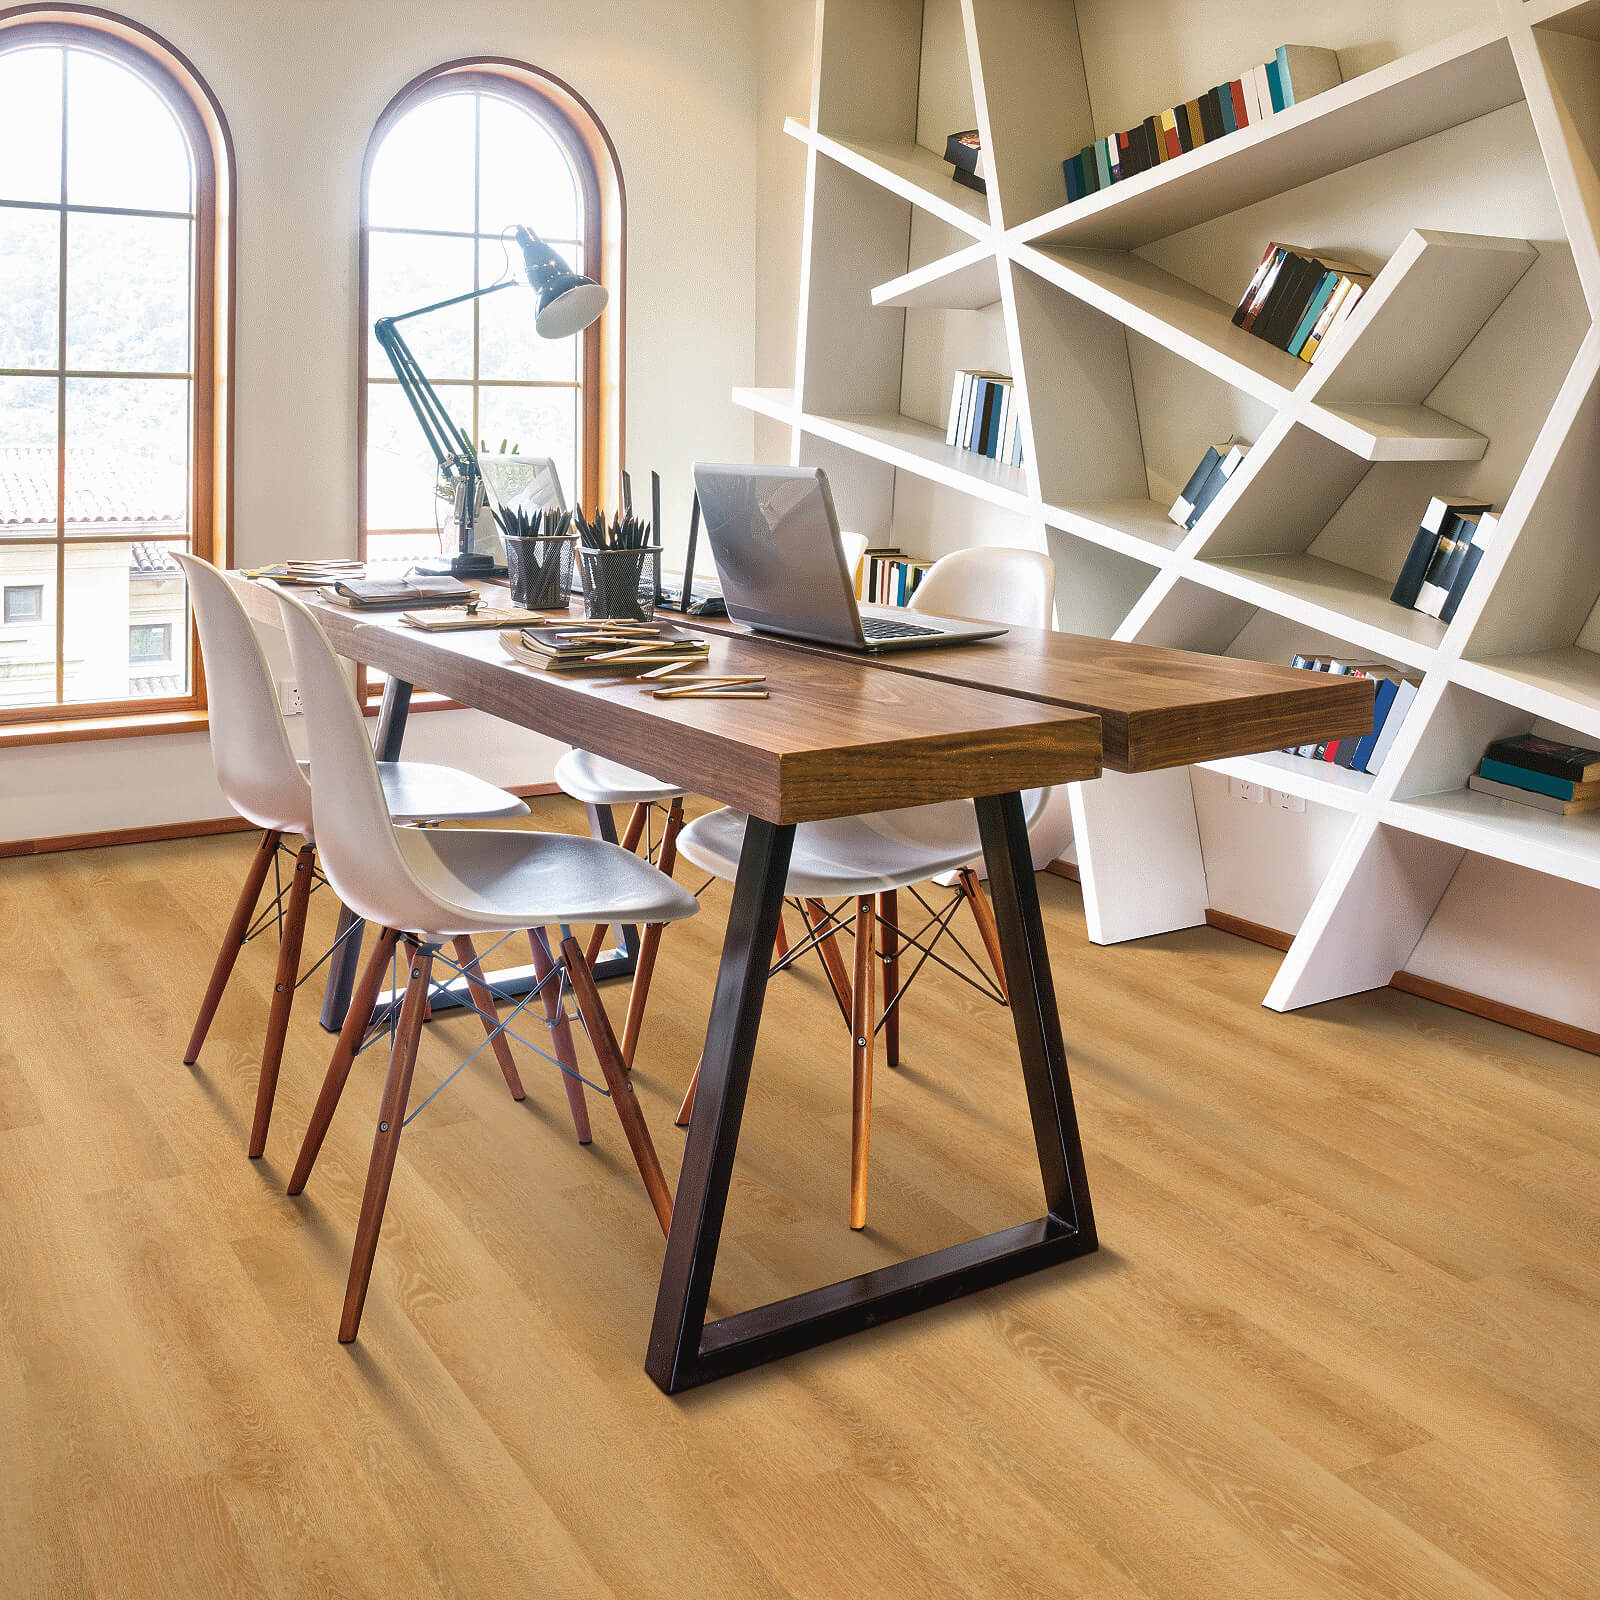 Vinyl flooring for study room | Floor Coverings of Winona